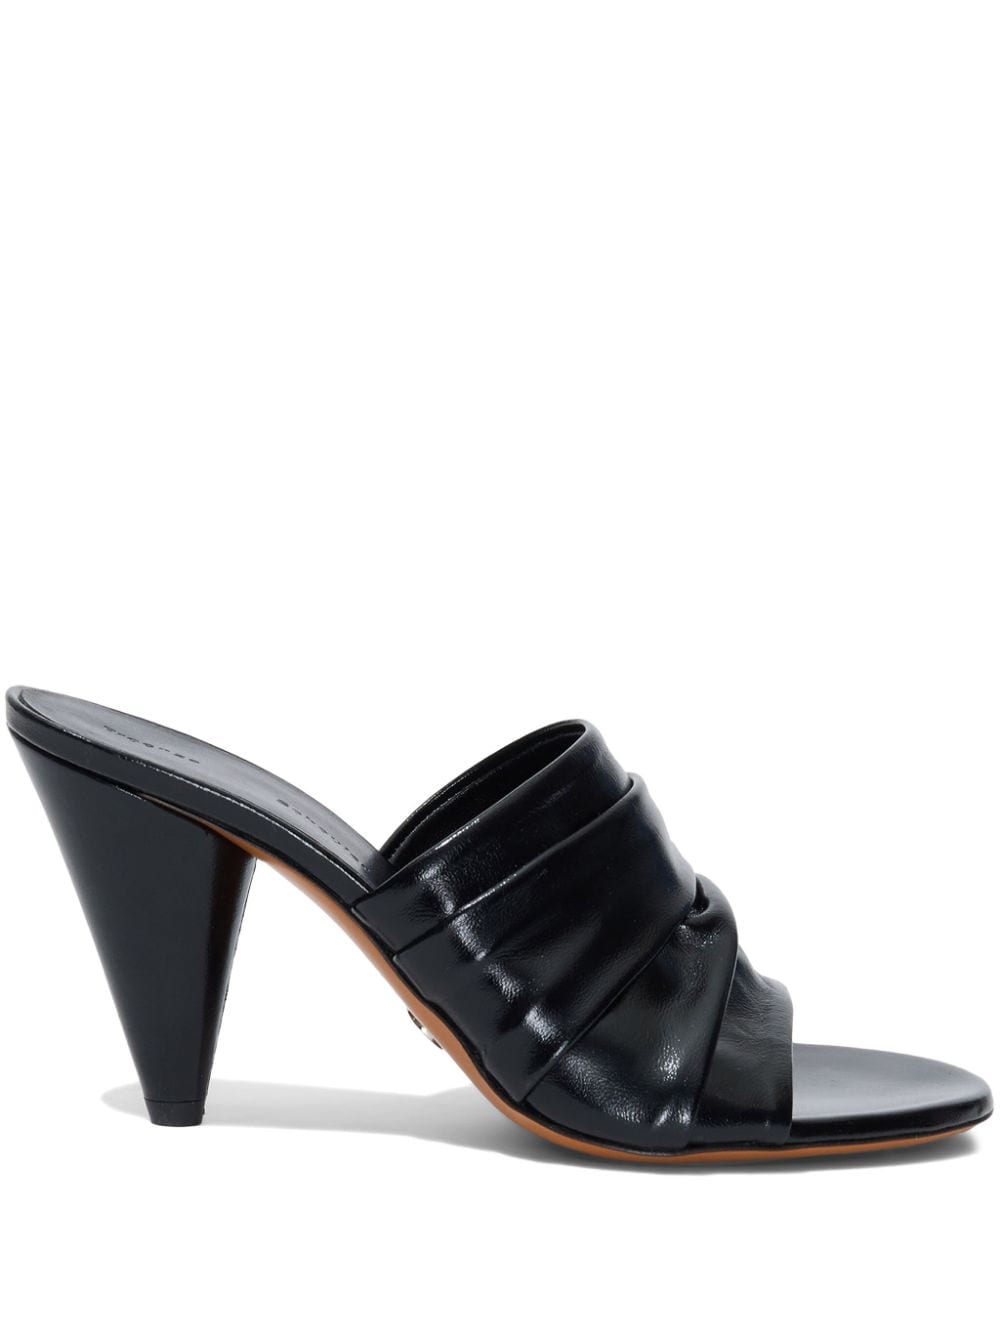 Proenza Schouler Gathered Cone 85mm leather sandals - Black von Proenza Schouler